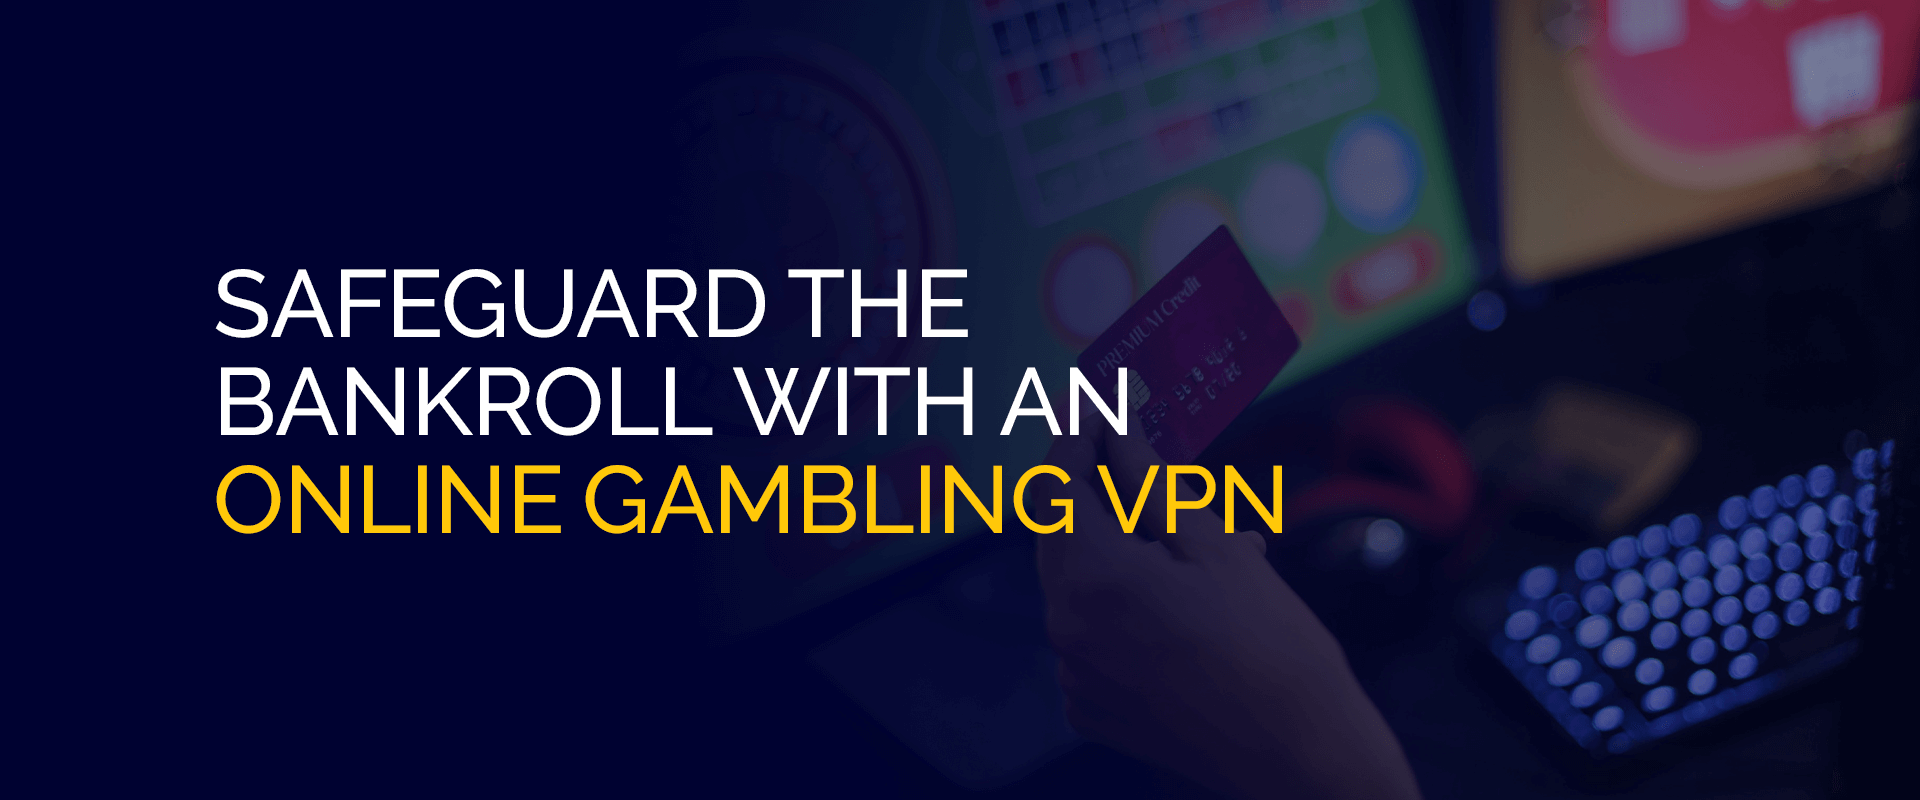 Chroń swój bankroll dzięki VPN hazardu online